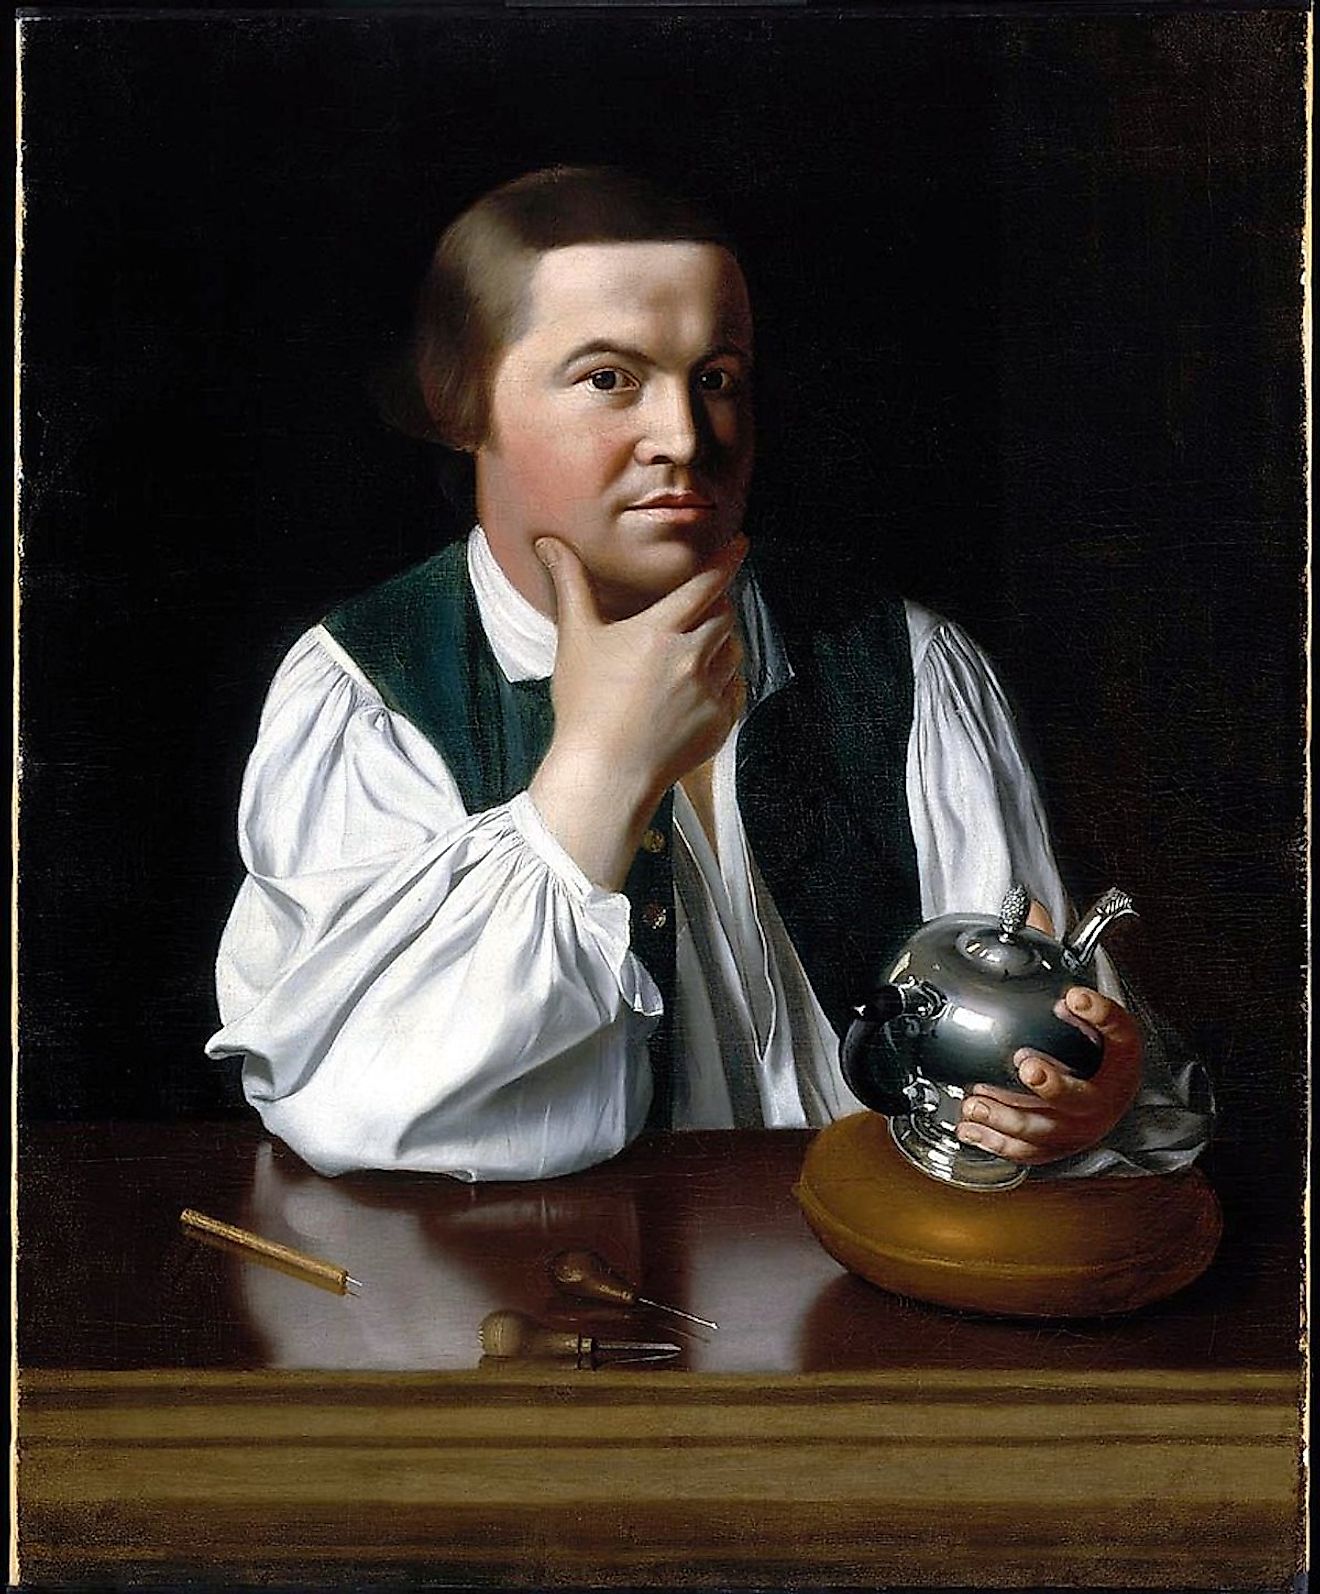 A portrait of Paul Revere. Image credit: John Singleton Copley/Public domain